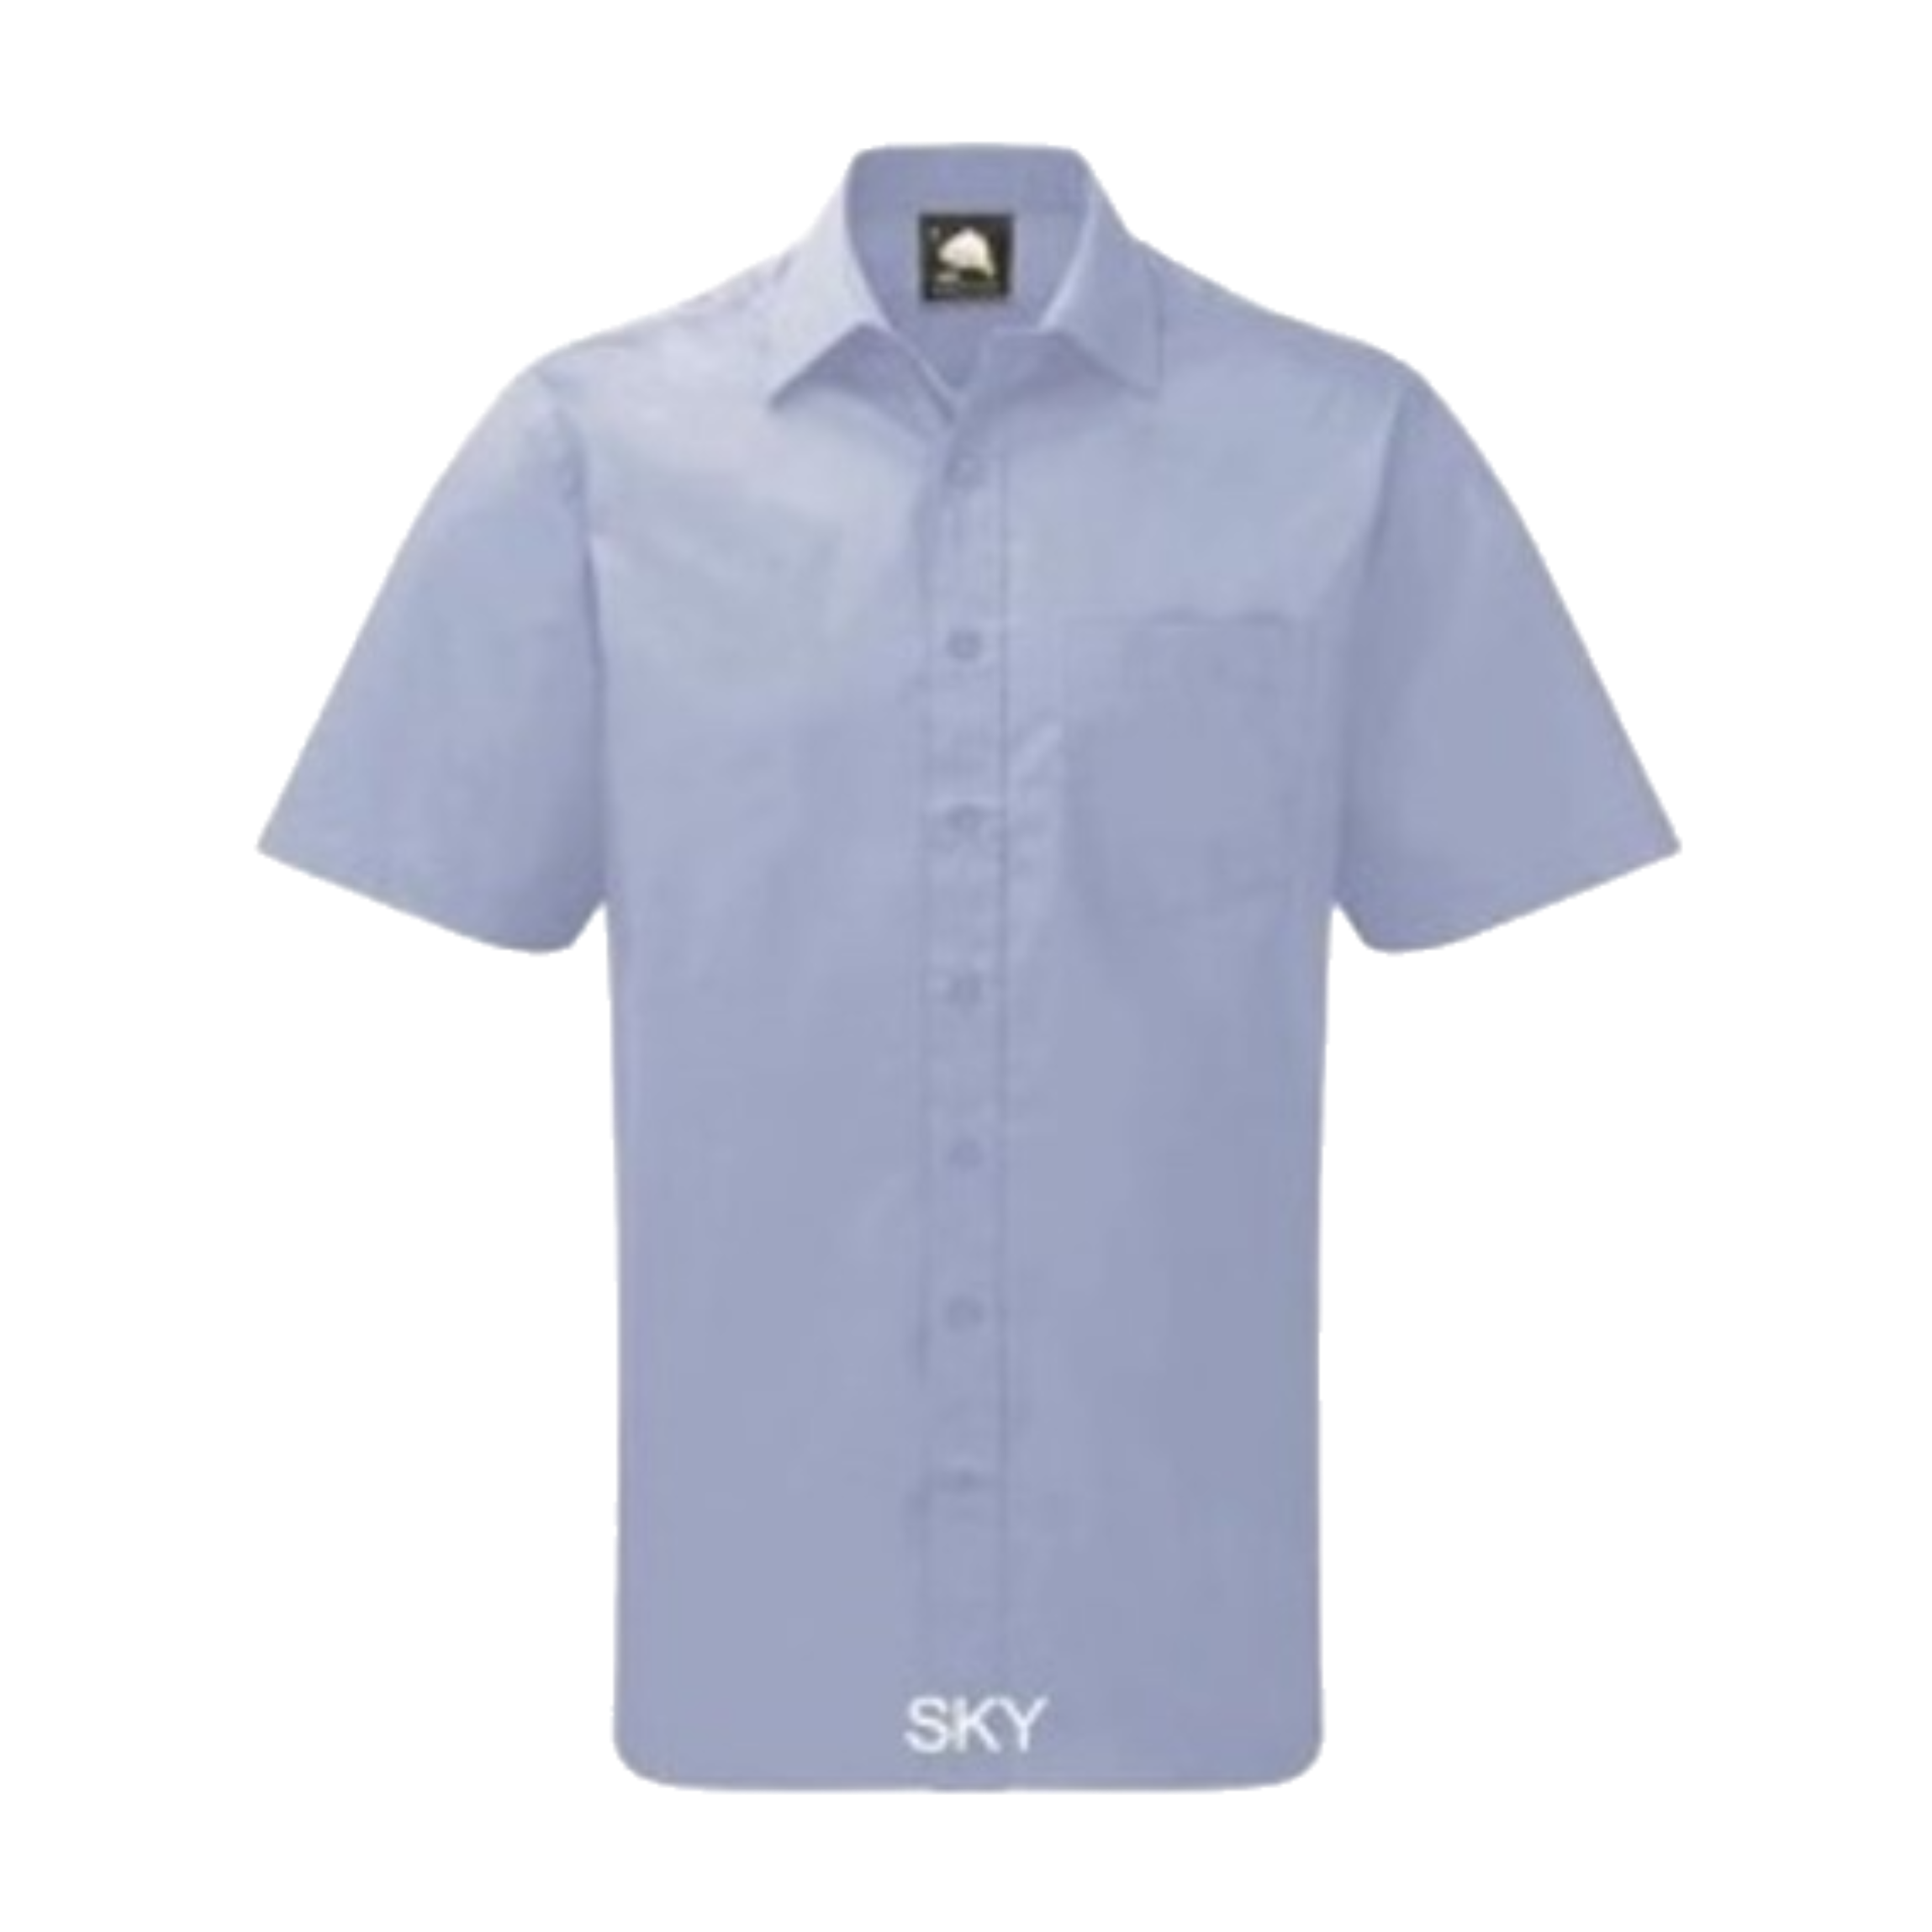 Orn Premium Oxford Short Sleeve Shirt - Sky Blue - 14in - TJ Hughes